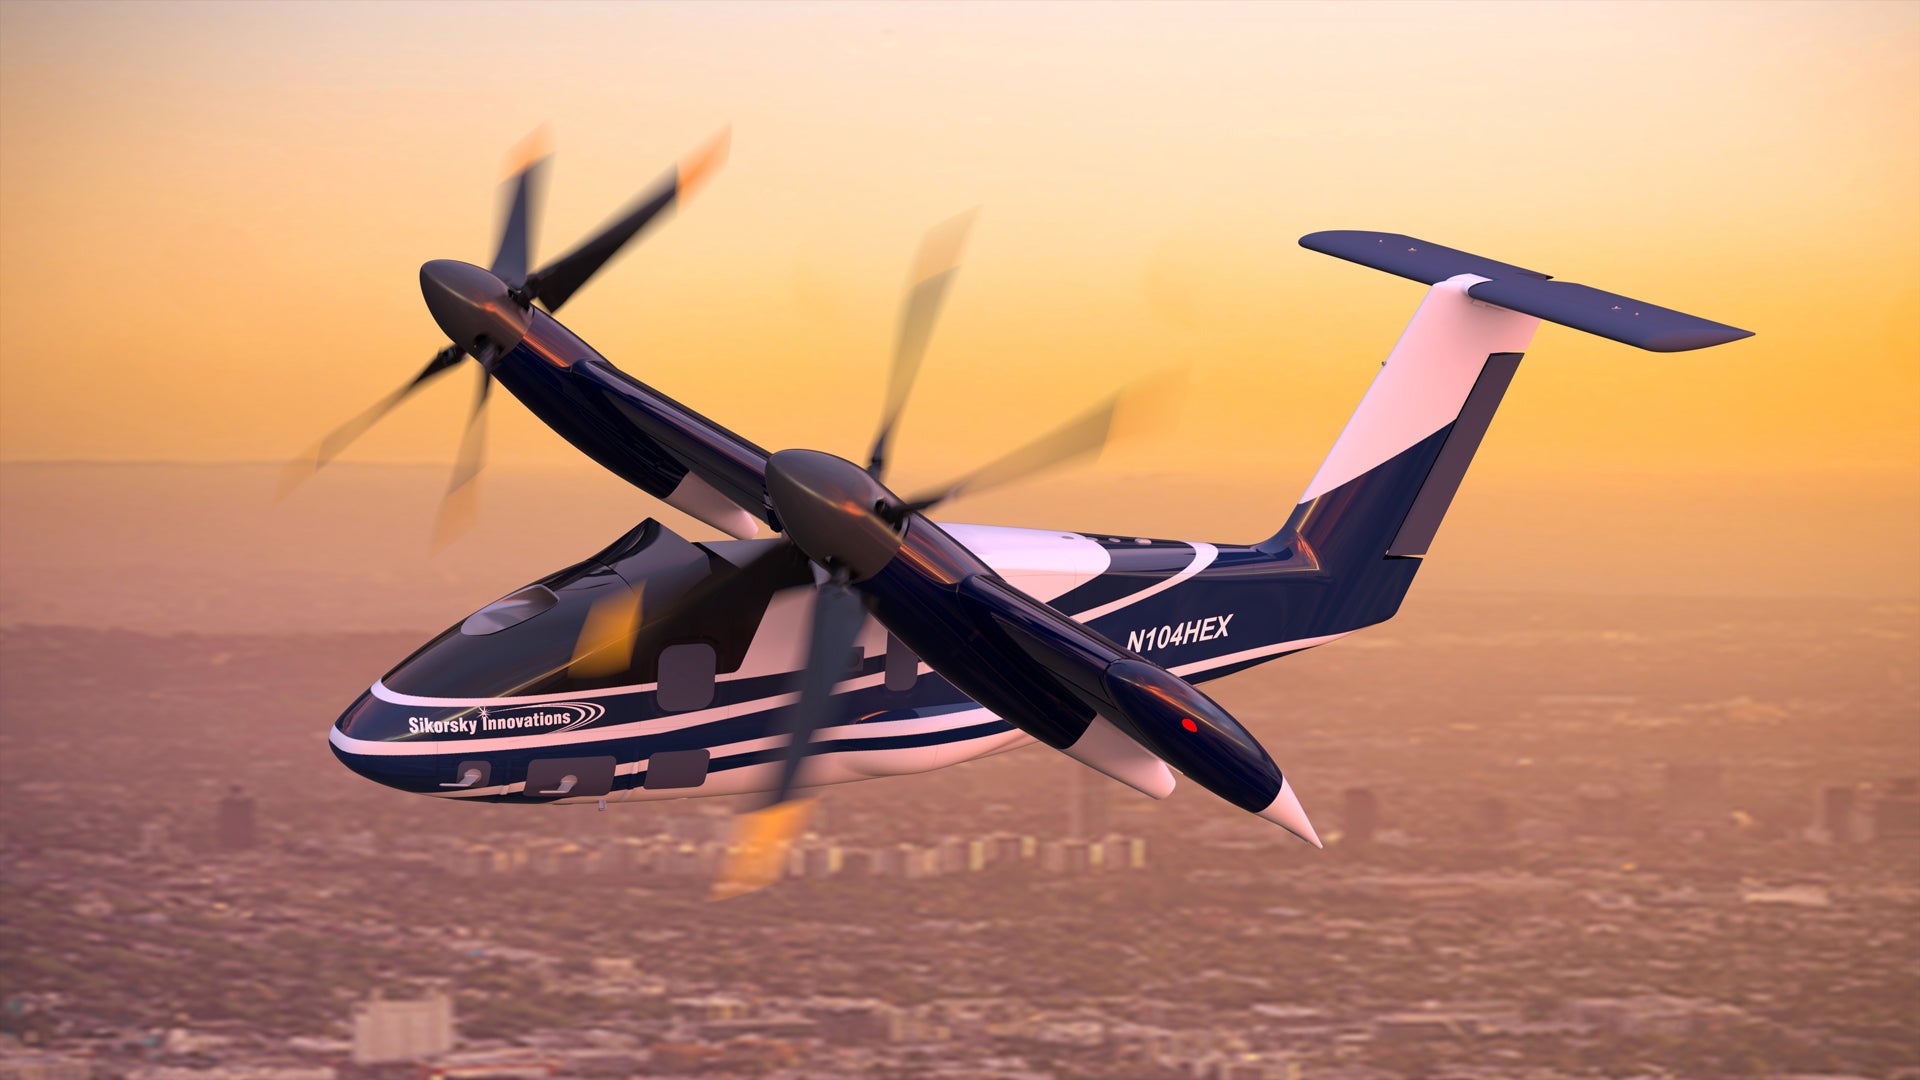 Sikorsky Looks to Enter eVTOL Industry with Eye-Catching Tilt-Wing Design